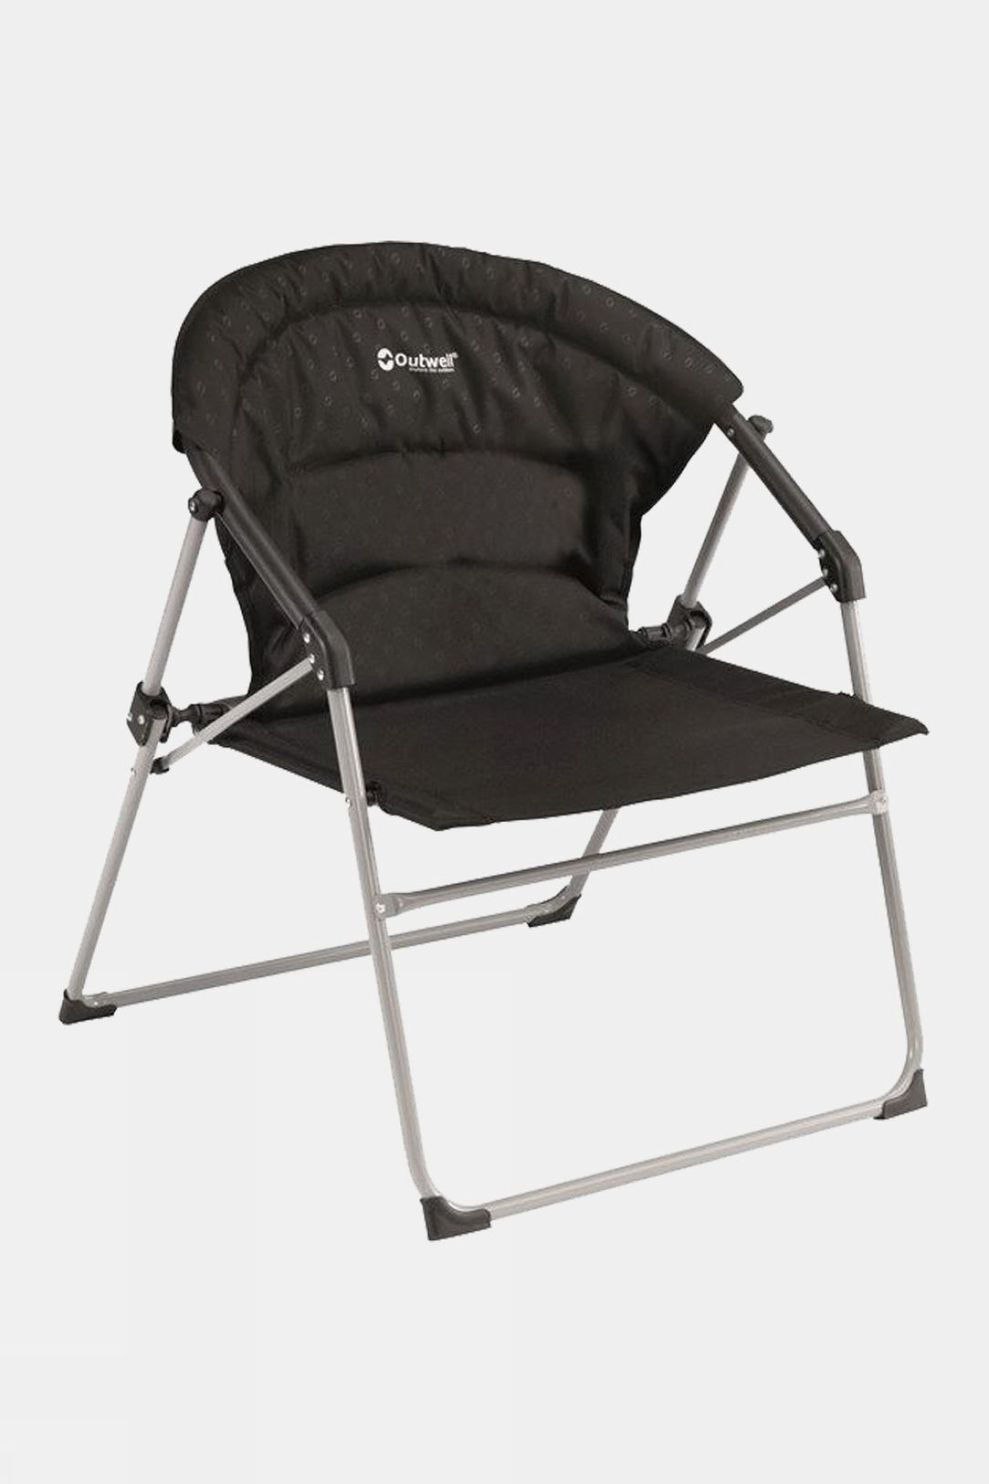 Outwell Campana Folding Chair